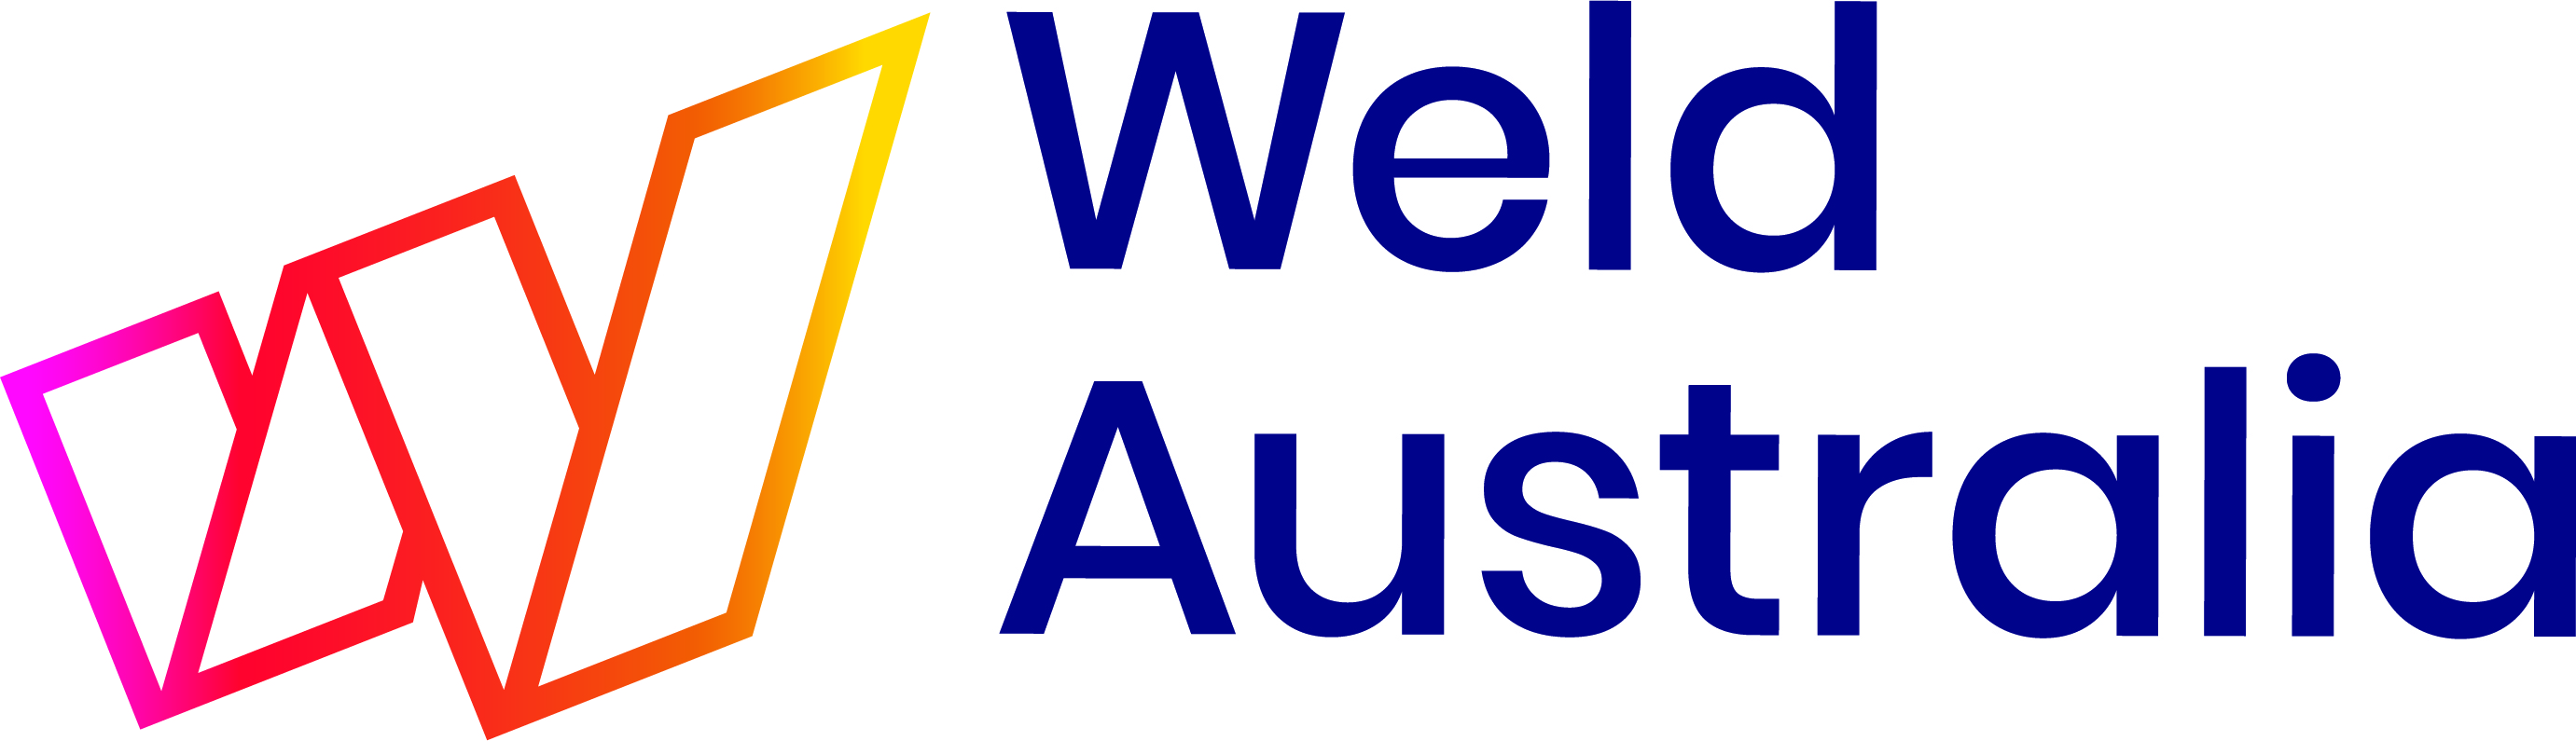 weld_australia_logo-trans